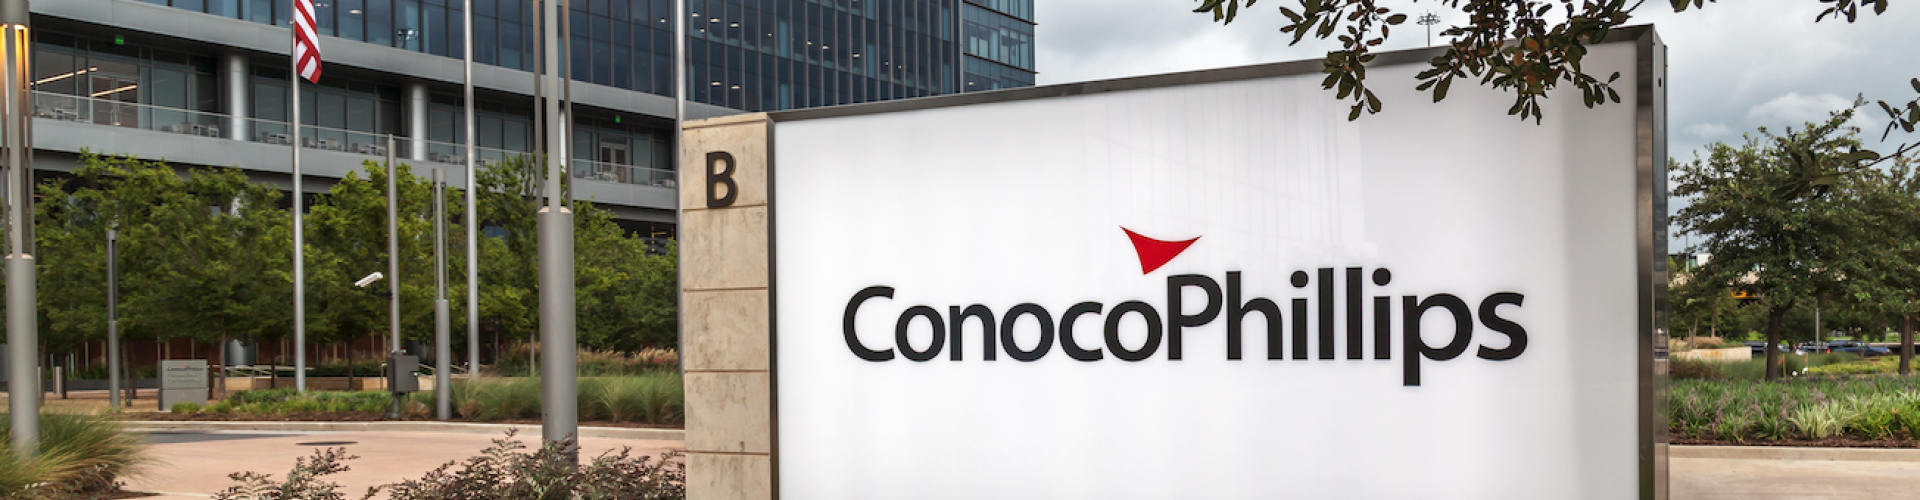 ConocoPhillips headquarters in Houston, Texas, USA